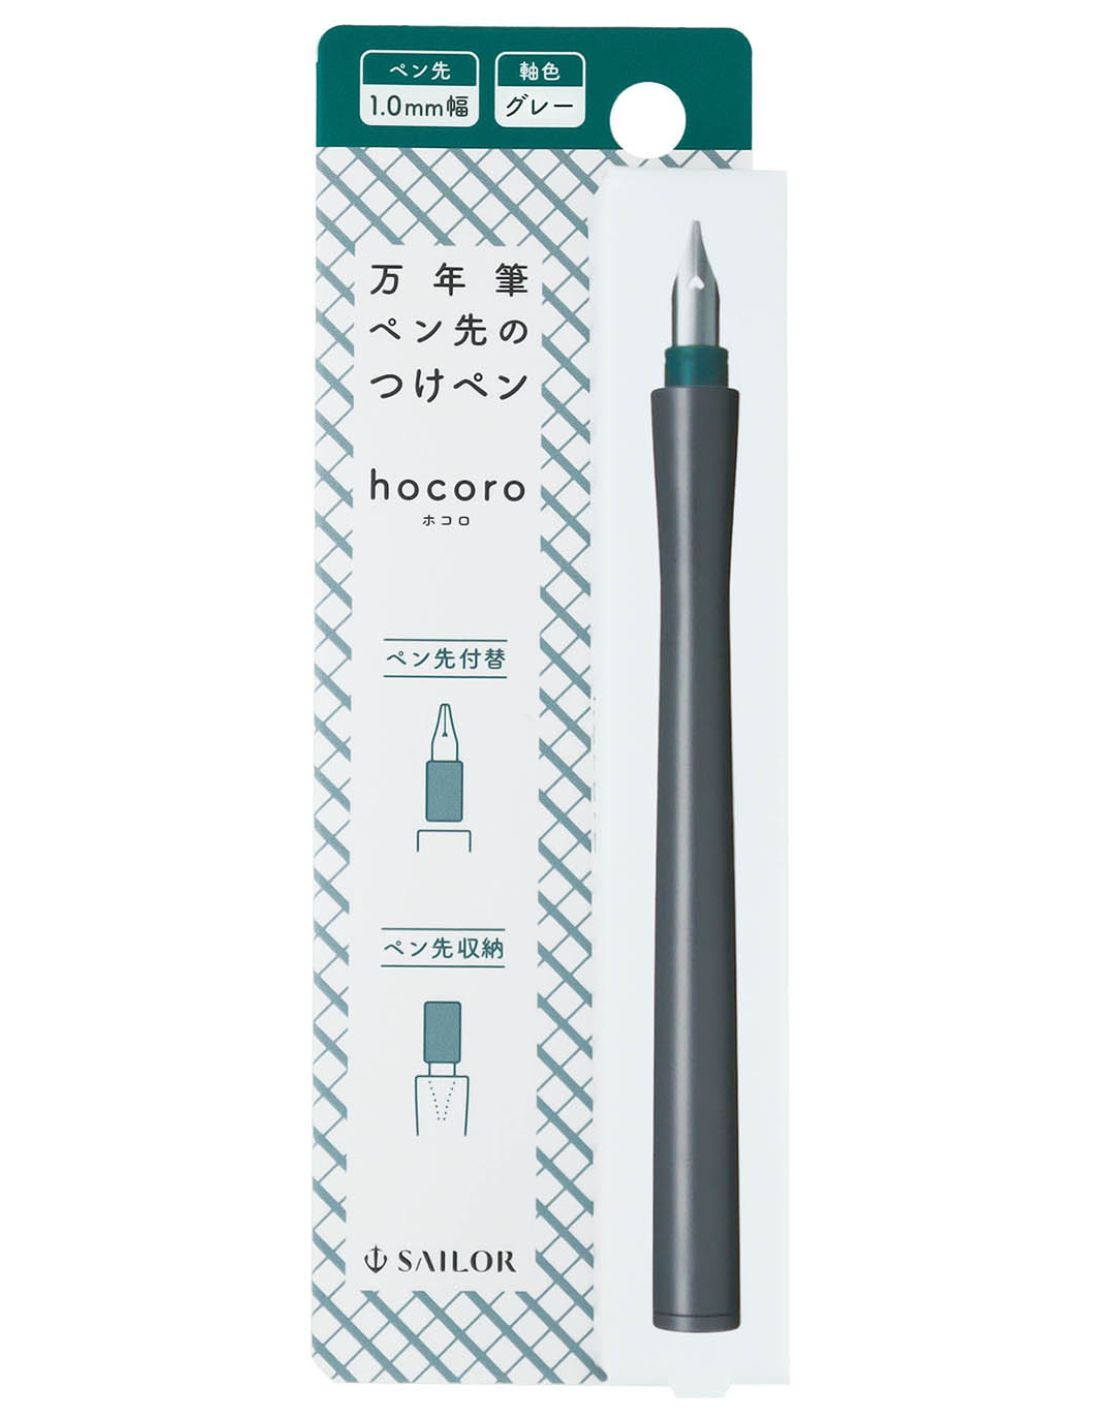 Sailor Hocoro Dip Pen - Grey - 1.0 Papeterie Makkura